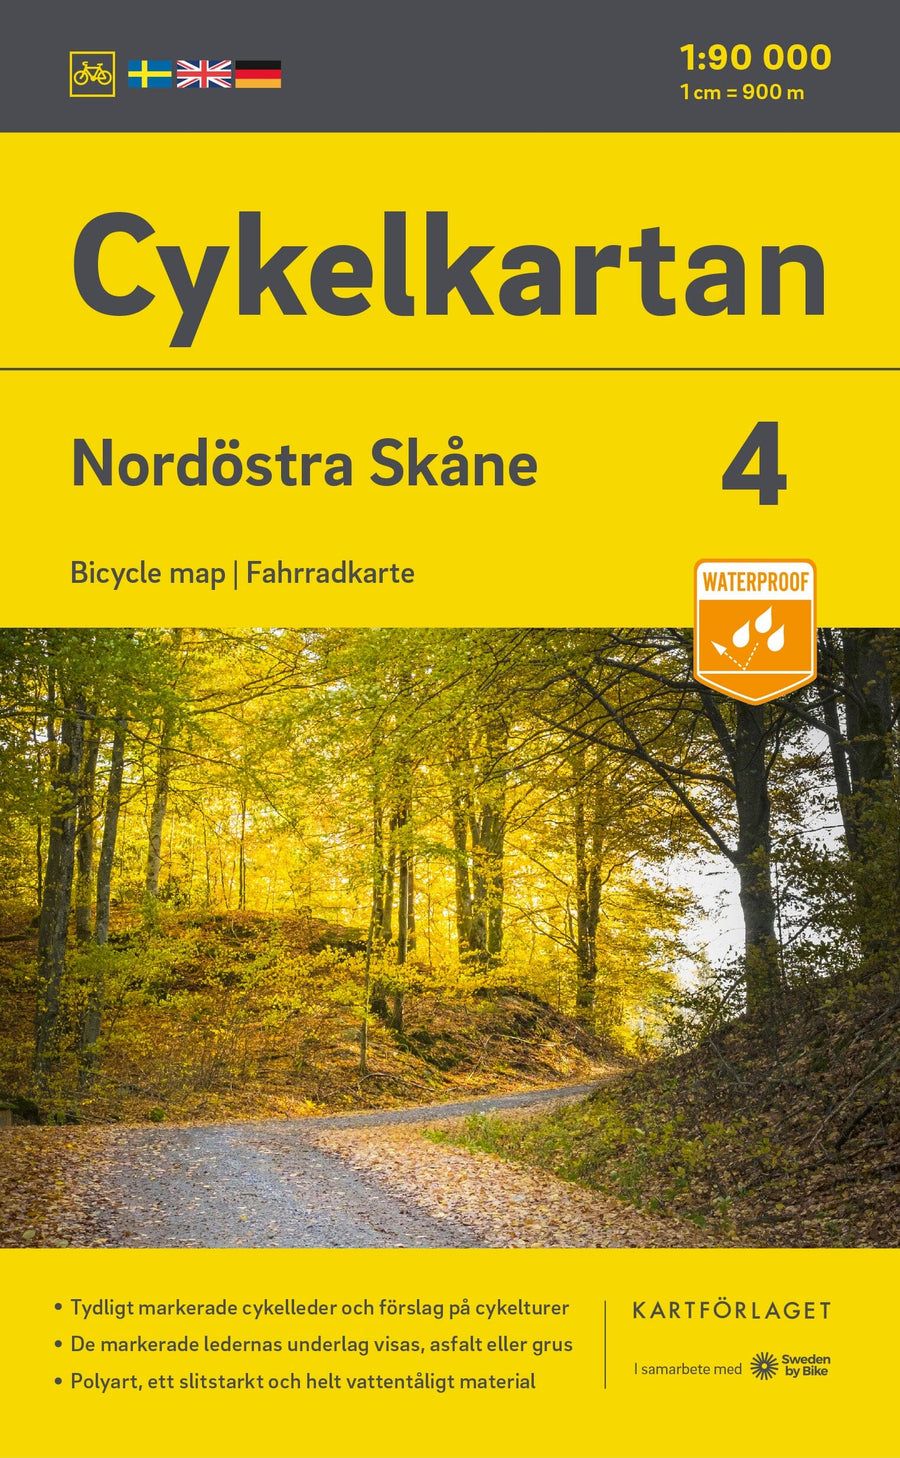 Carte cycliste n° 04 - Skane Nord-est (Suède) | Norstedts carte pliée Norstedts 